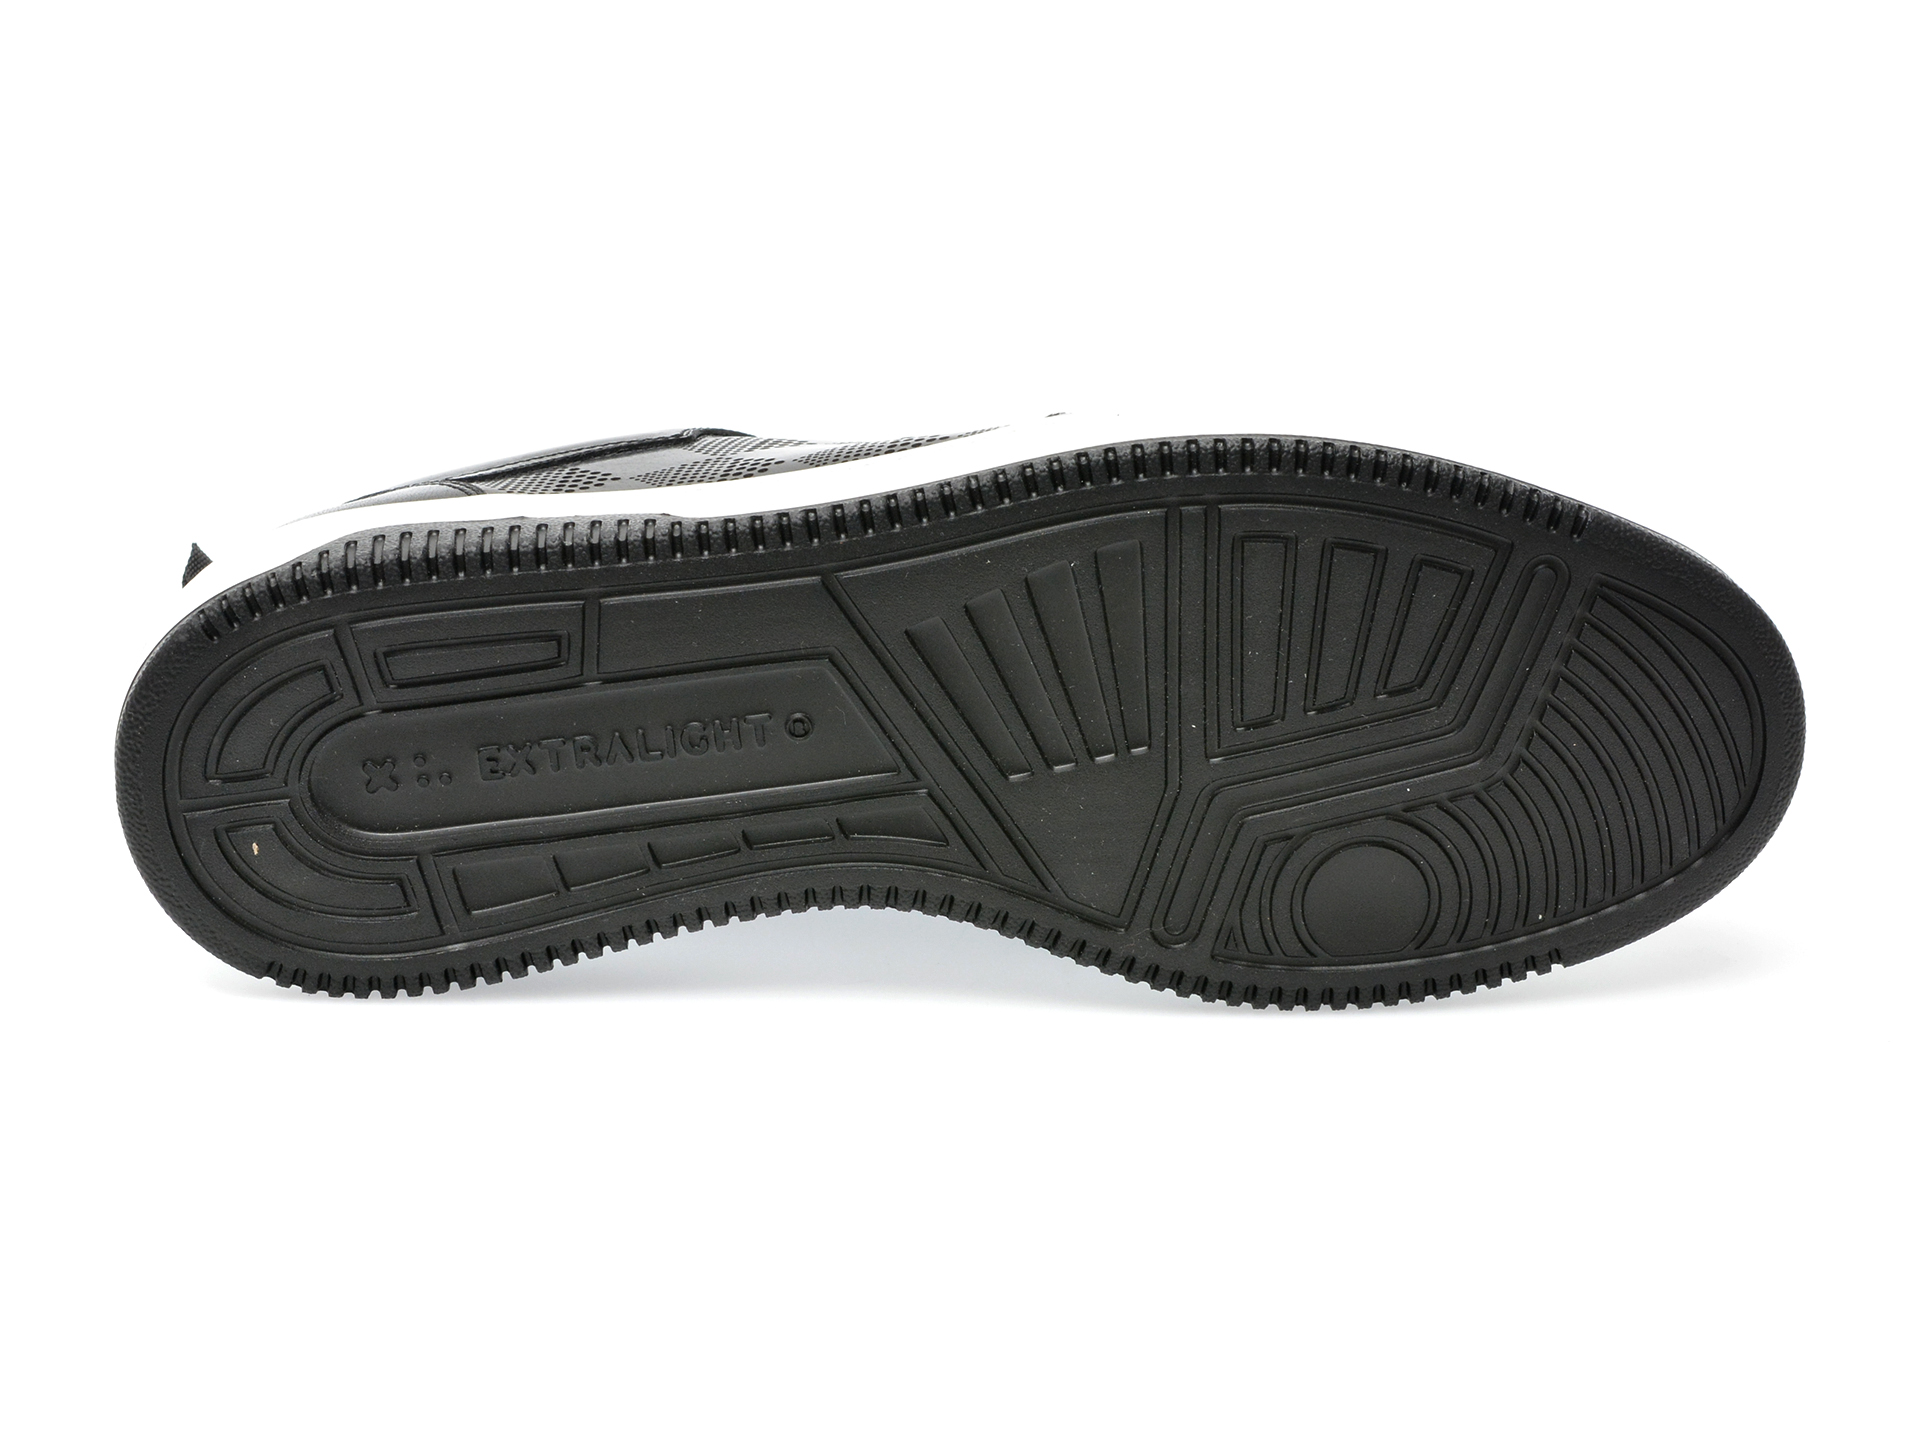 Pantofi LE COLONEL negri, 63236, din piele naturala